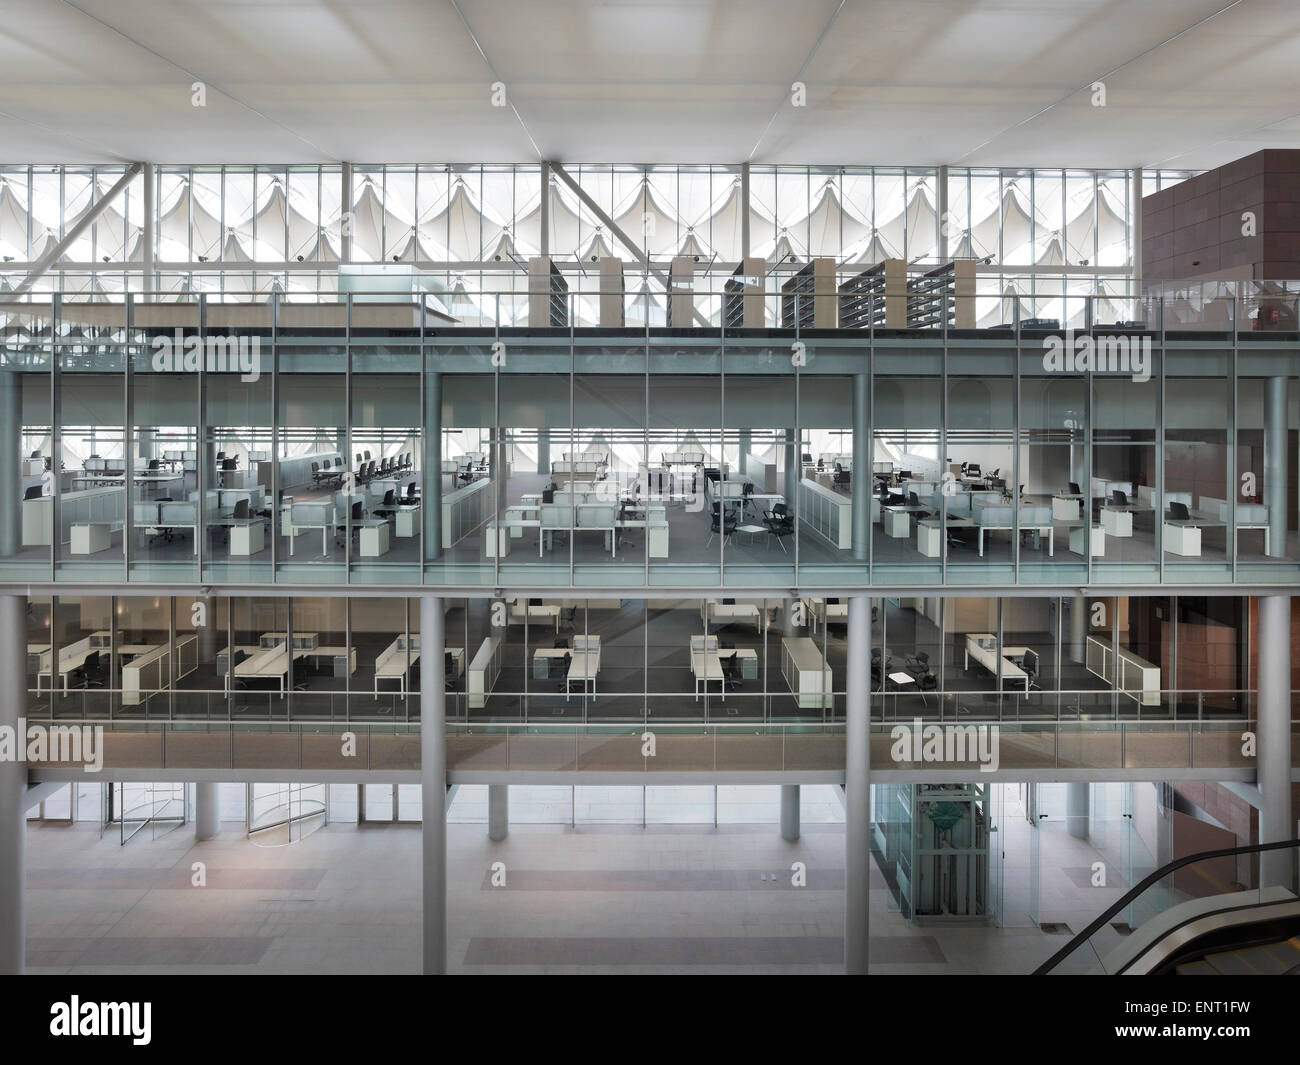 Overview of internal spaces. King Fahad National Library, Riyadh, Saudi Arabia. Architect: Gerber Architekten, 2013. Stock Photo